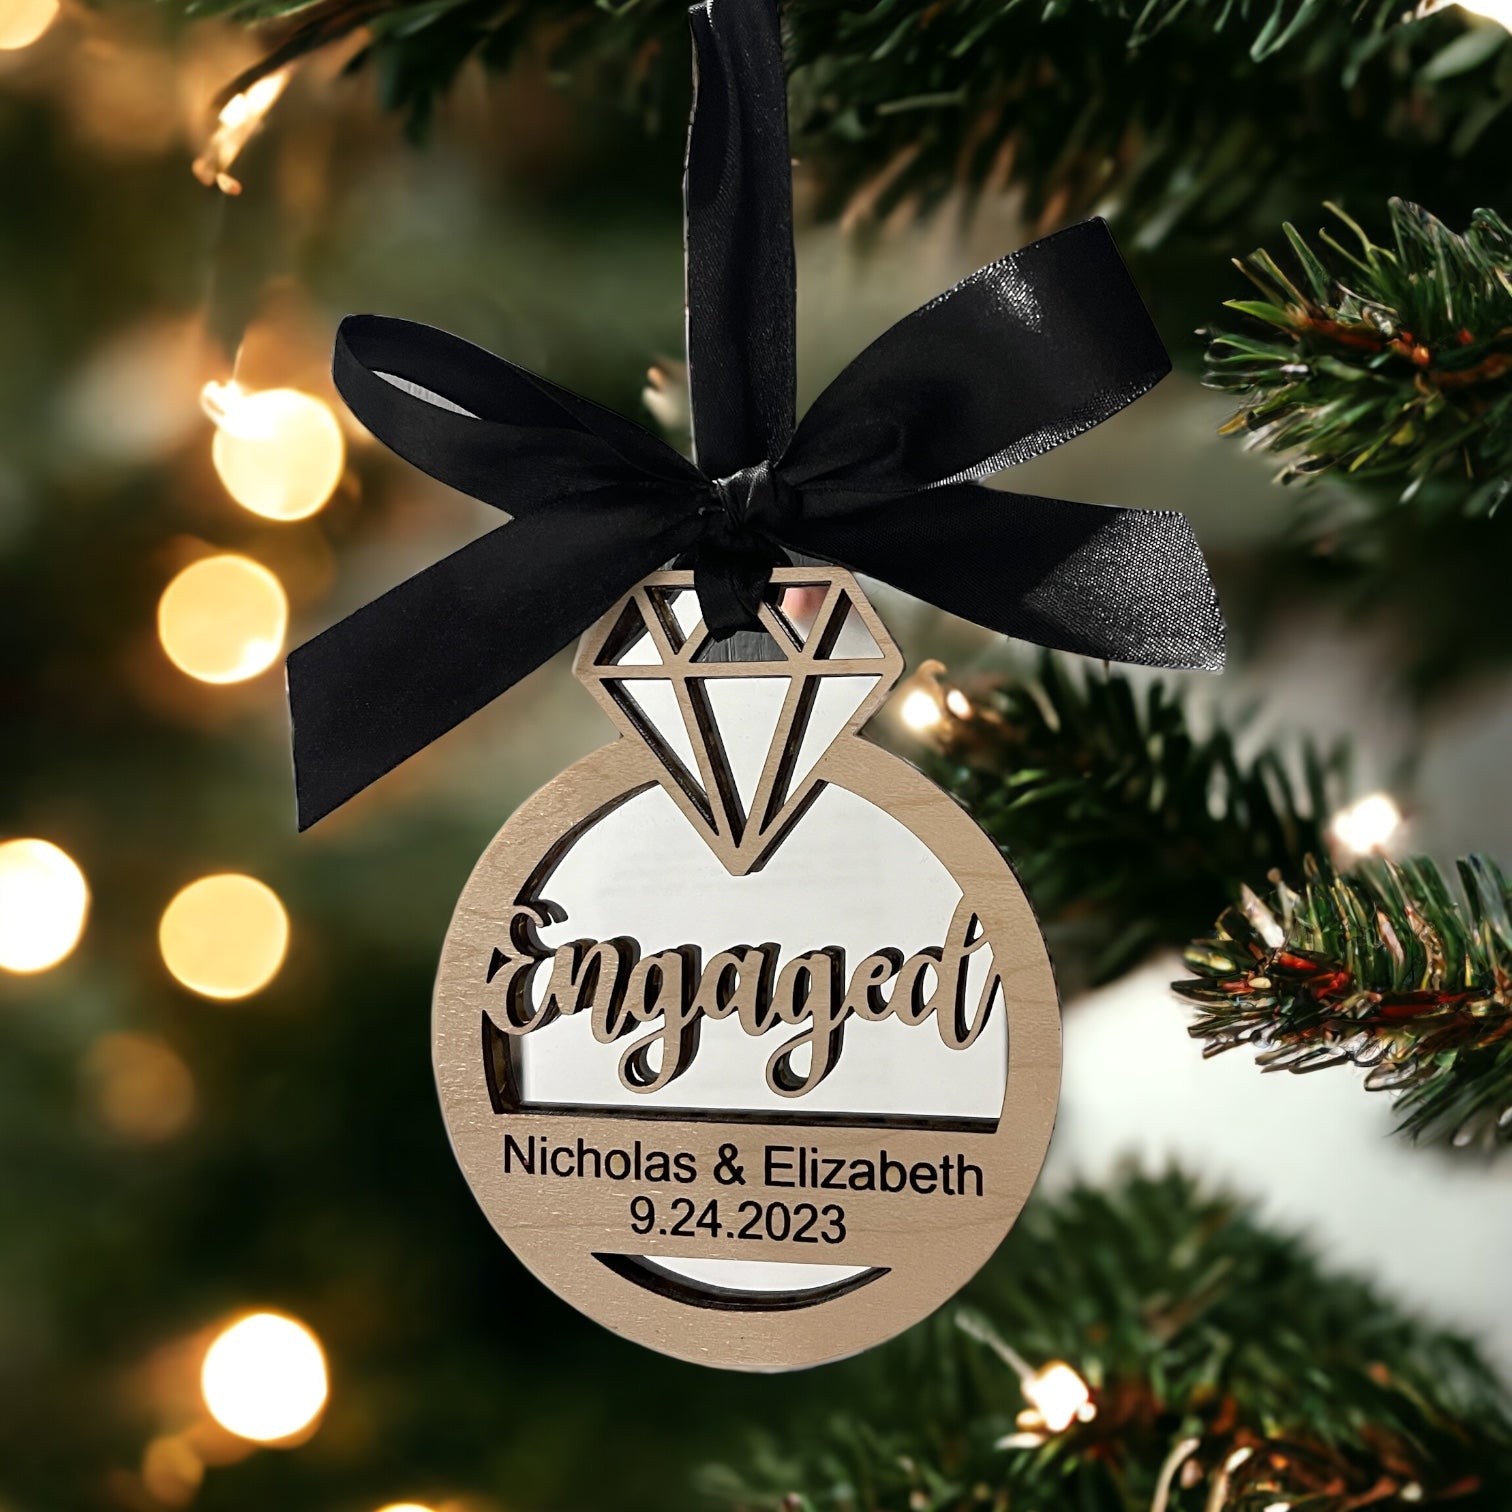 Married, Engaged Christmas Ornament Keepsake - Embellish My Heart